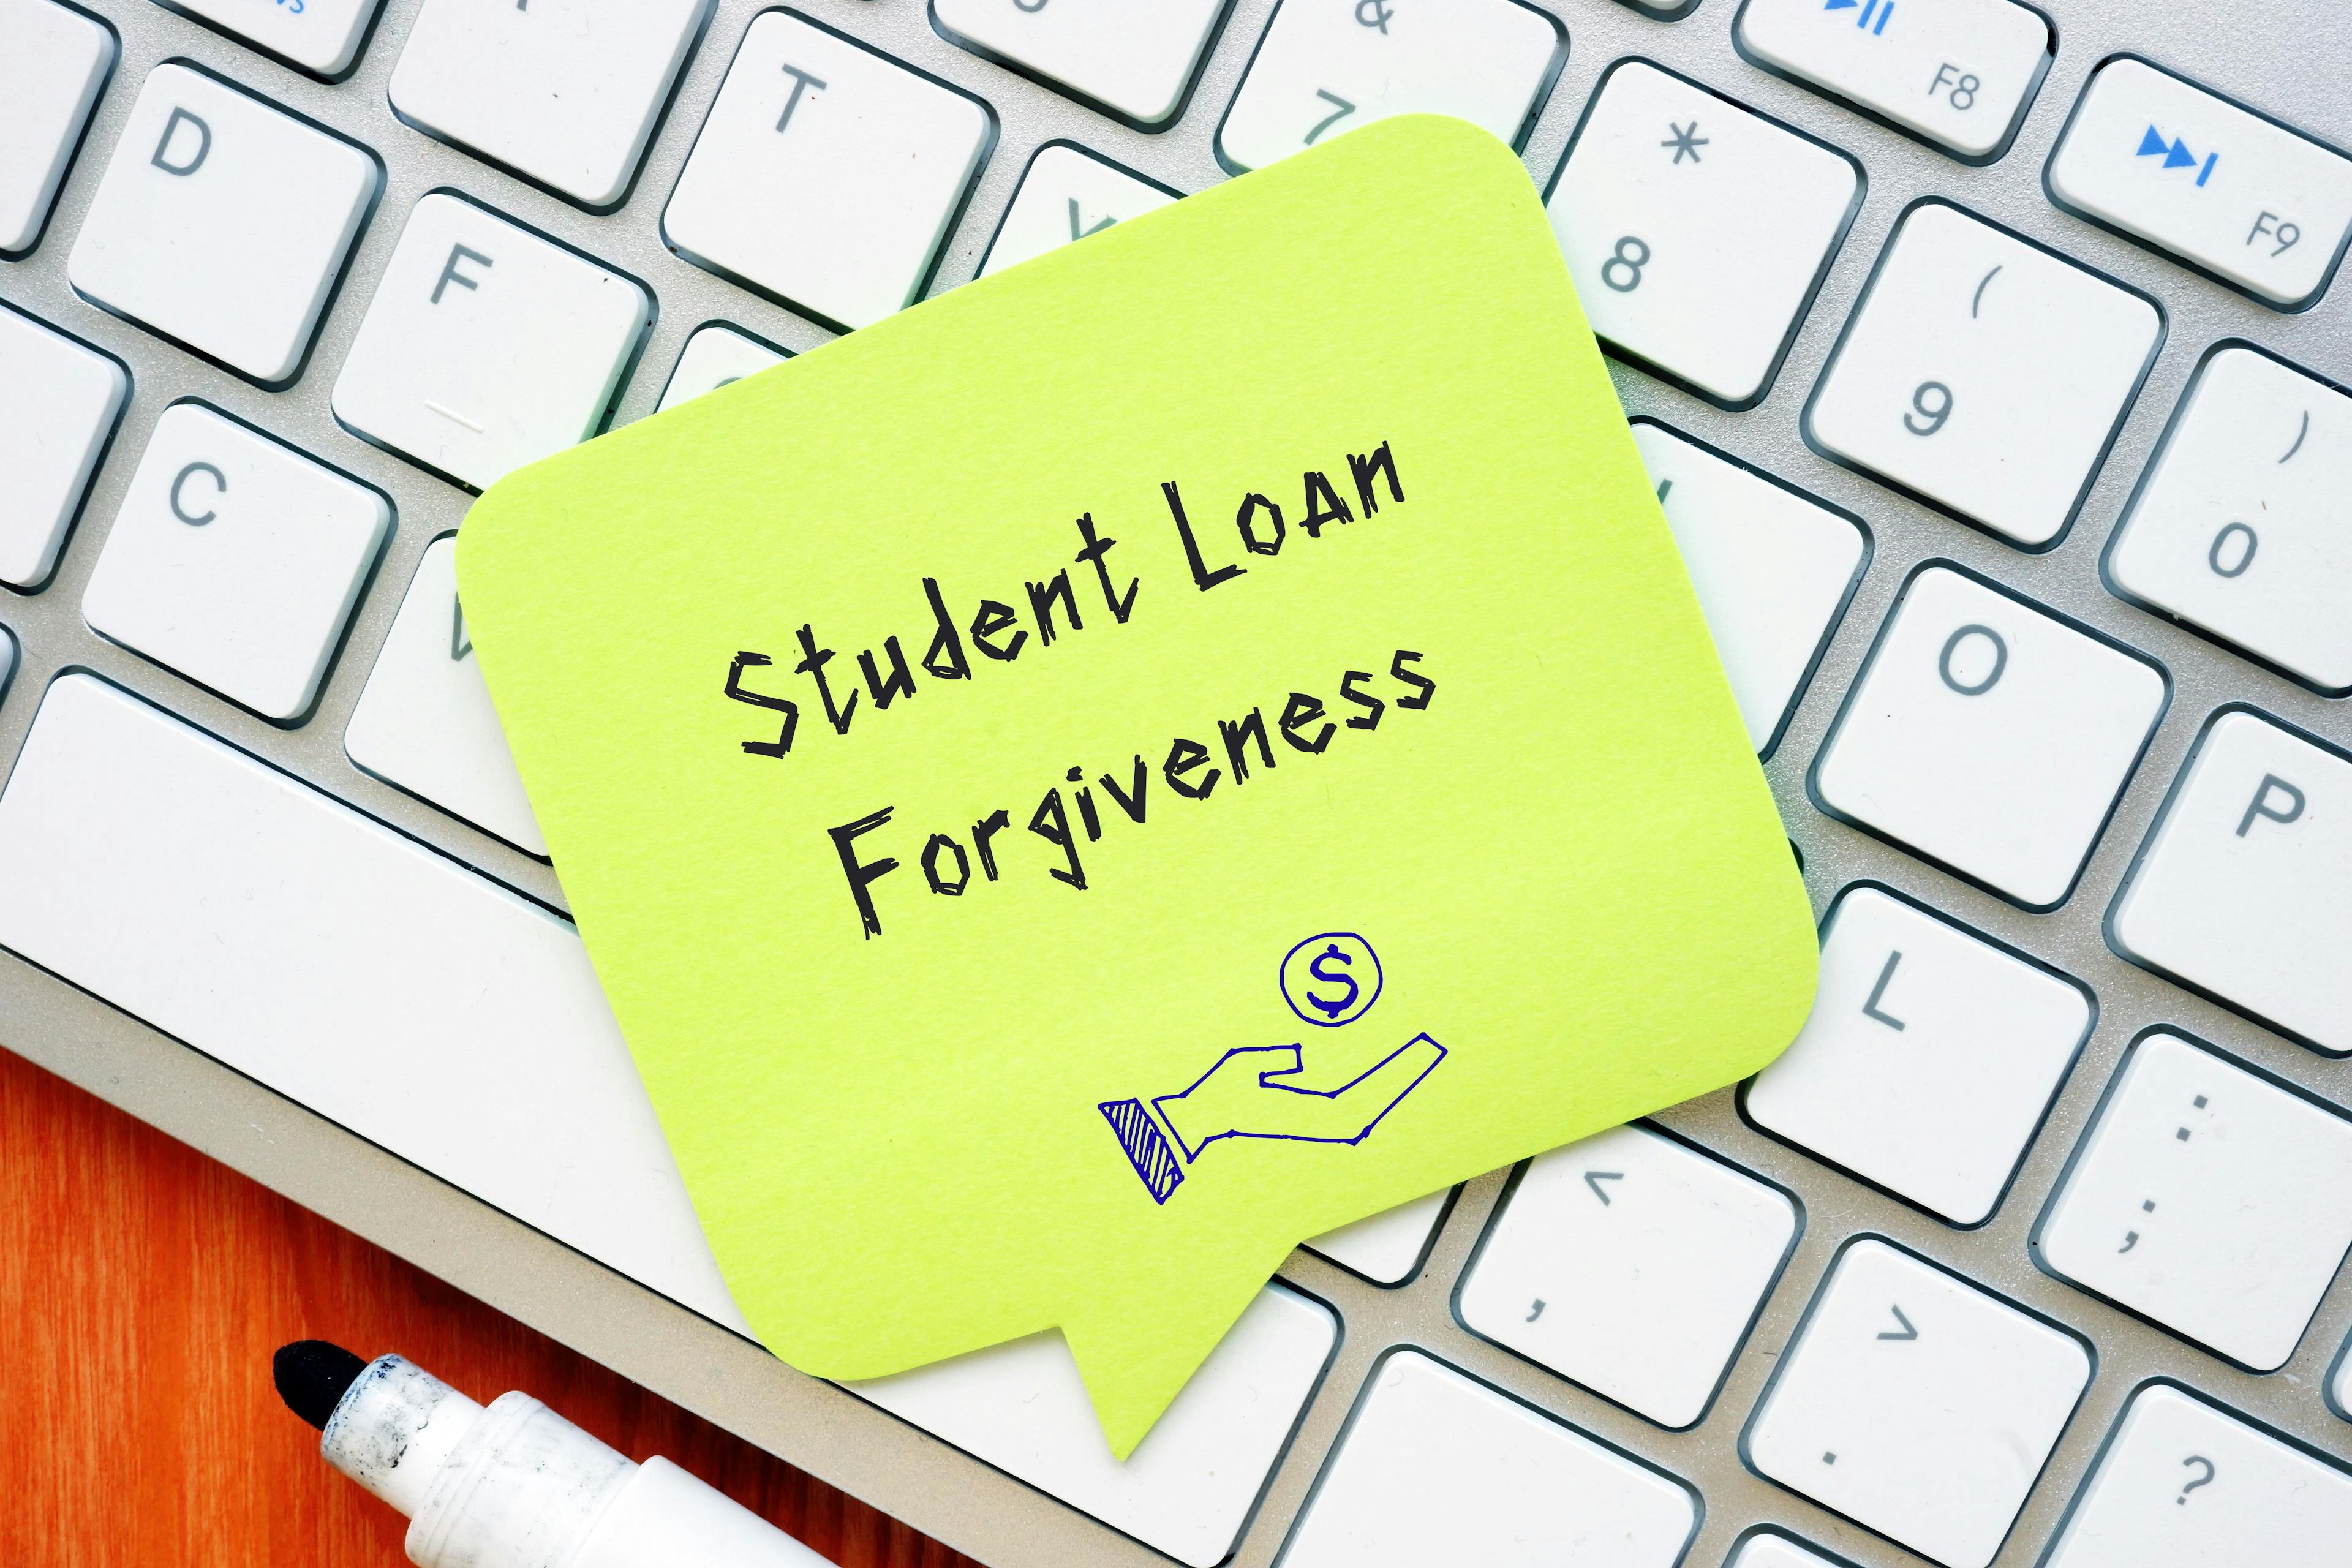 student loan forgiveness post it note